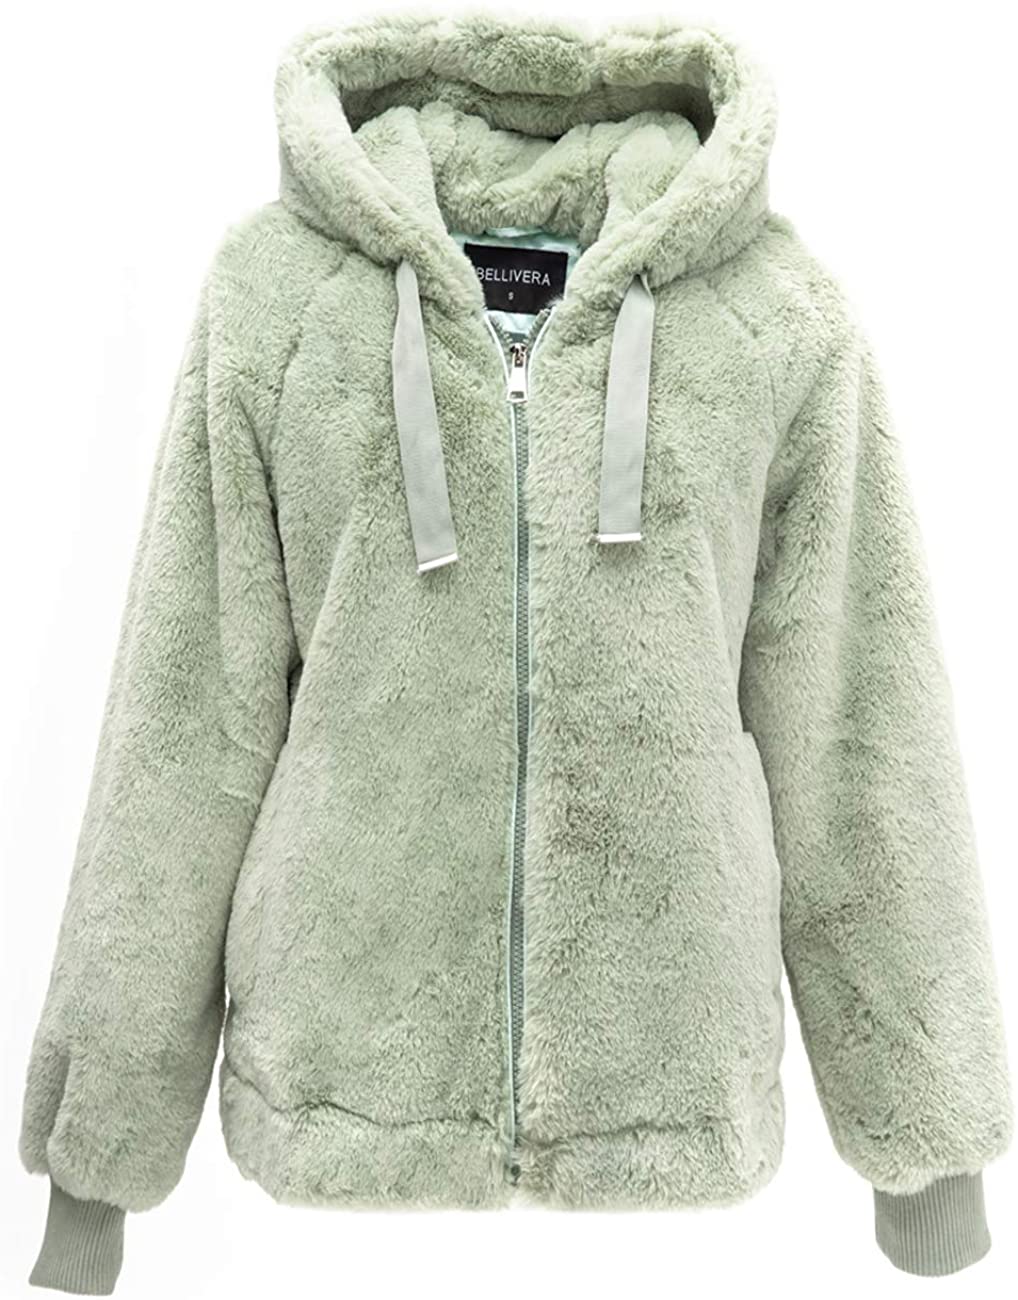 The Sherpa Shearling Fuzzy Jacket with Hood Fall and Winter Fashion 2021 Bellivera Women's Faux Fur Fleece Coat